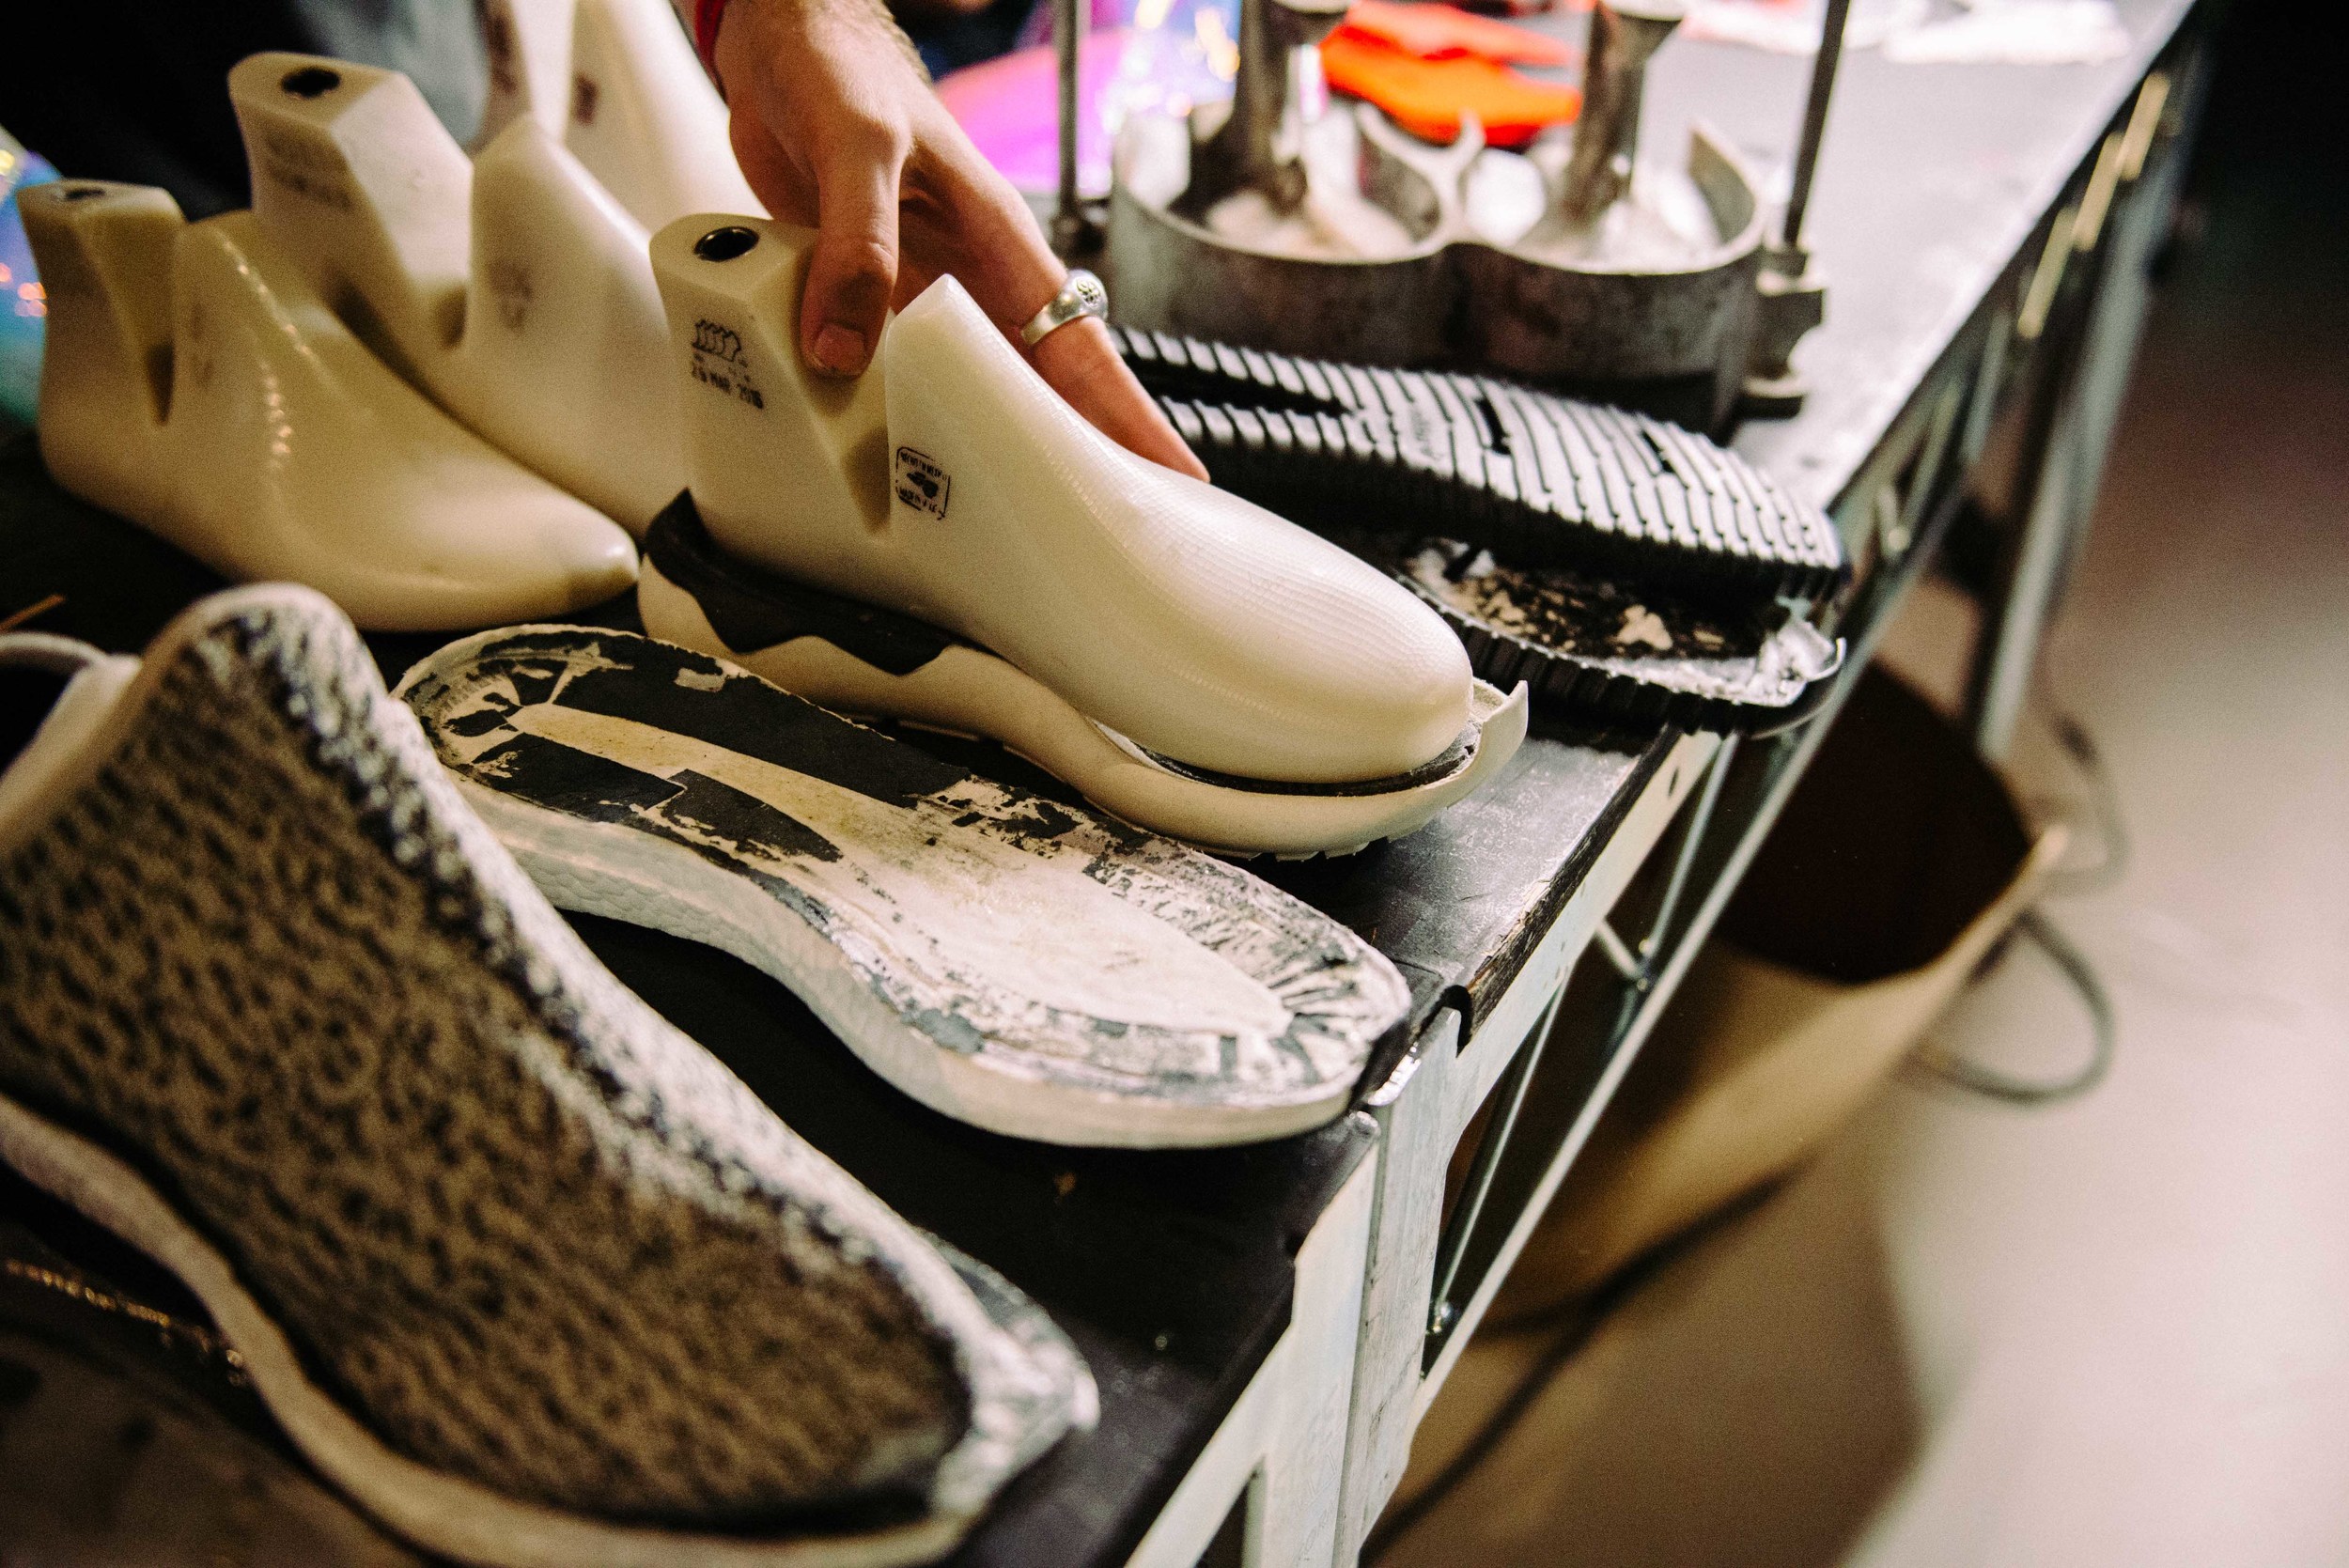  The Shoe Surgeon customizing soccer cleats at Adidas' Mercury Center. / Photo: © Diane Abapo for SUSPEND Magazine. 